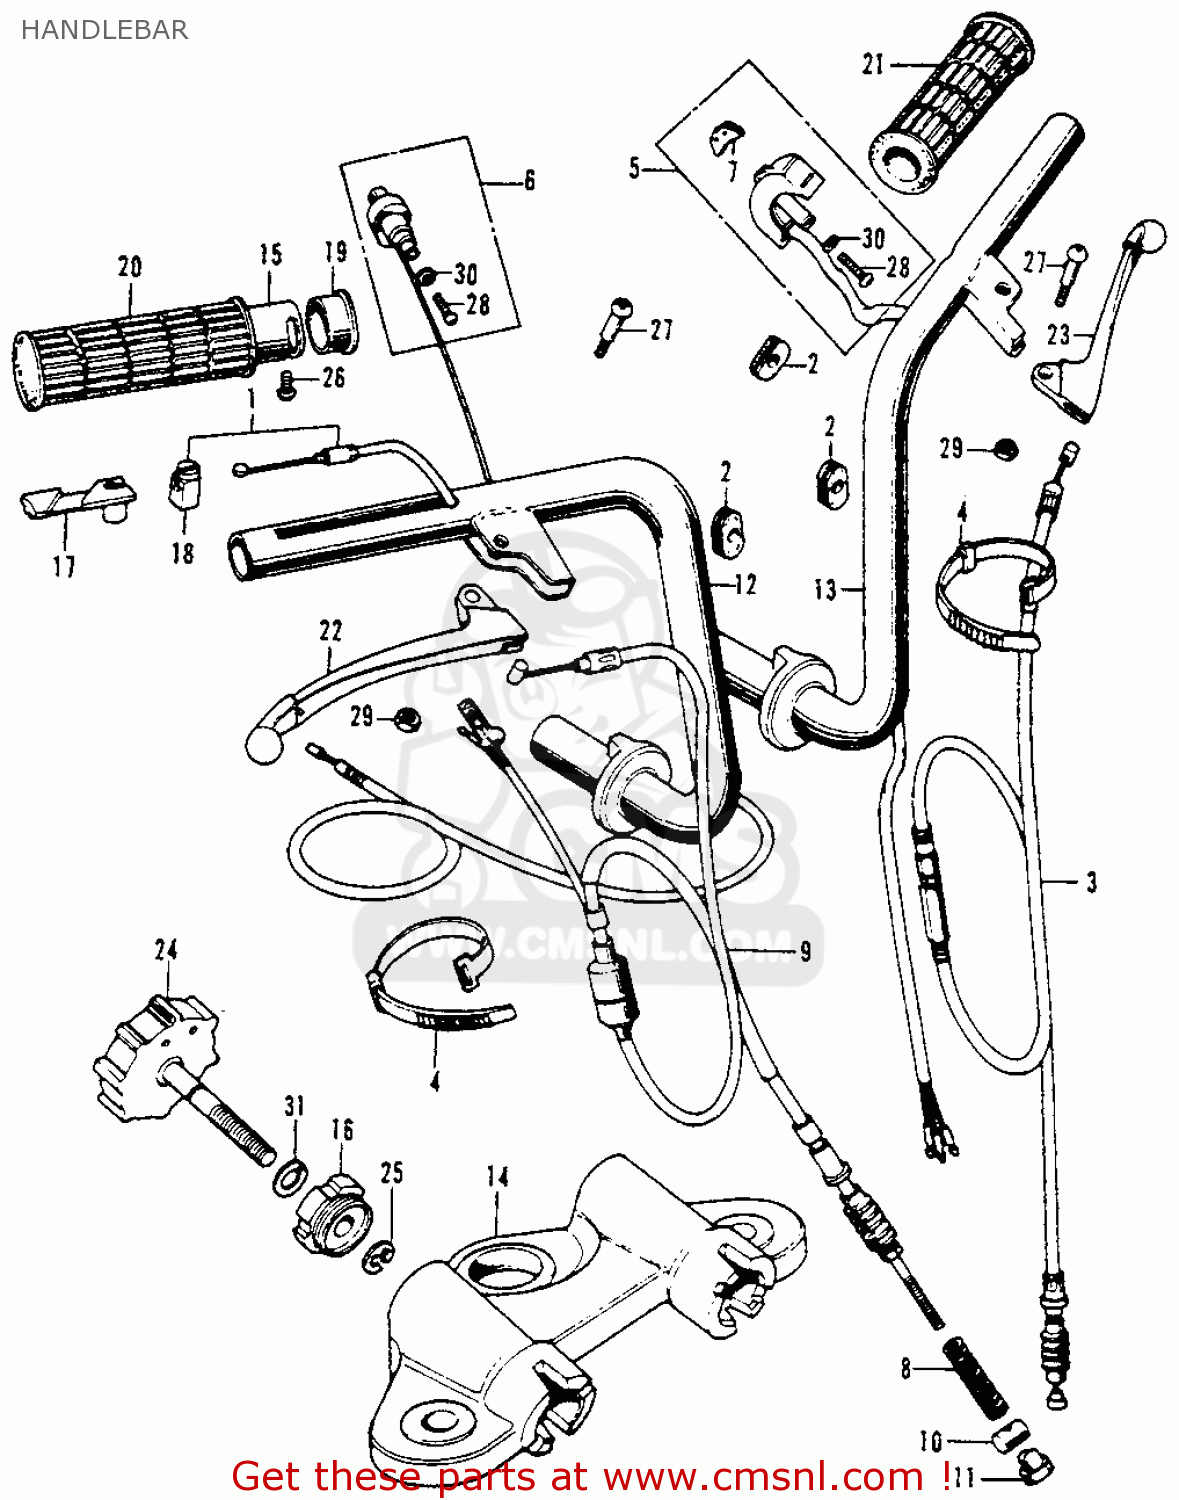 Honda ct70 shop manual pdf #1